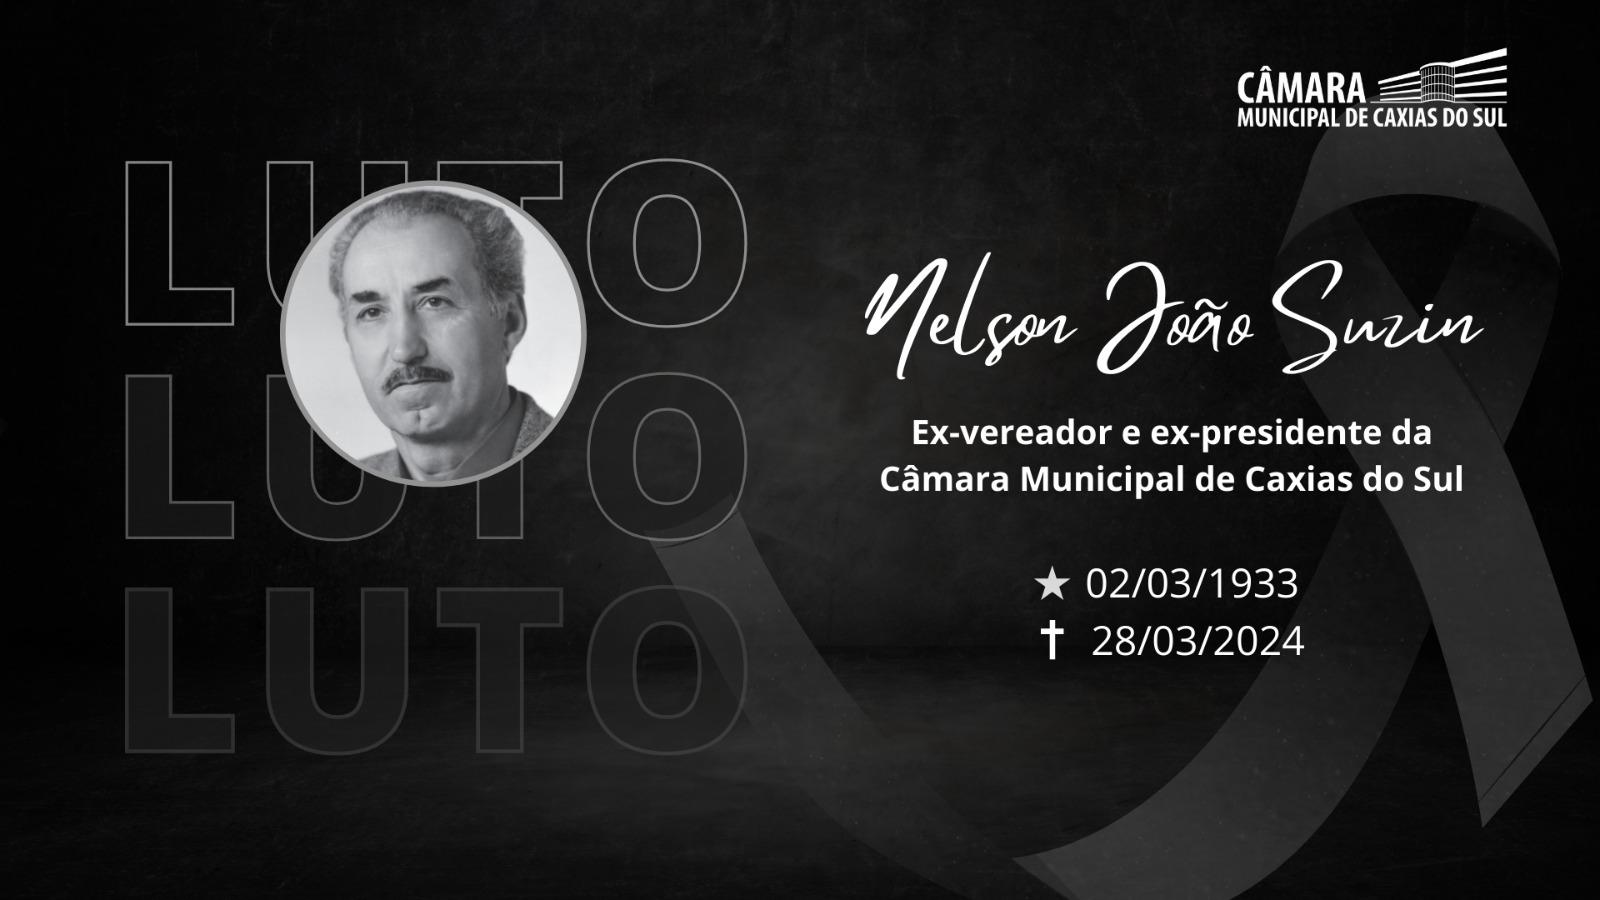 Morre ex-presidente do Legislativo caxiense Nelson João Suzin